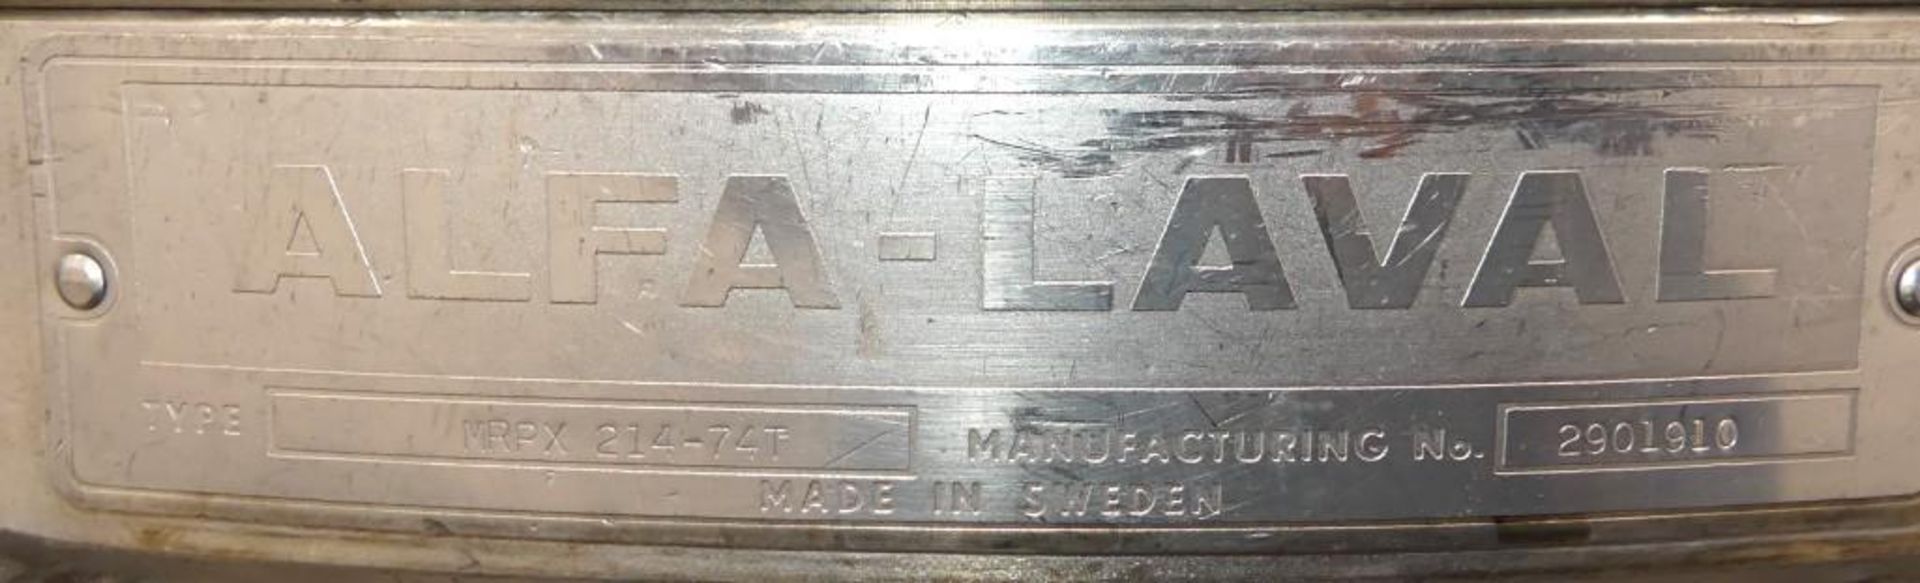 Alfa Laval MRPX-214 Stainless Steel Bowl Separator - Image 11 of 29